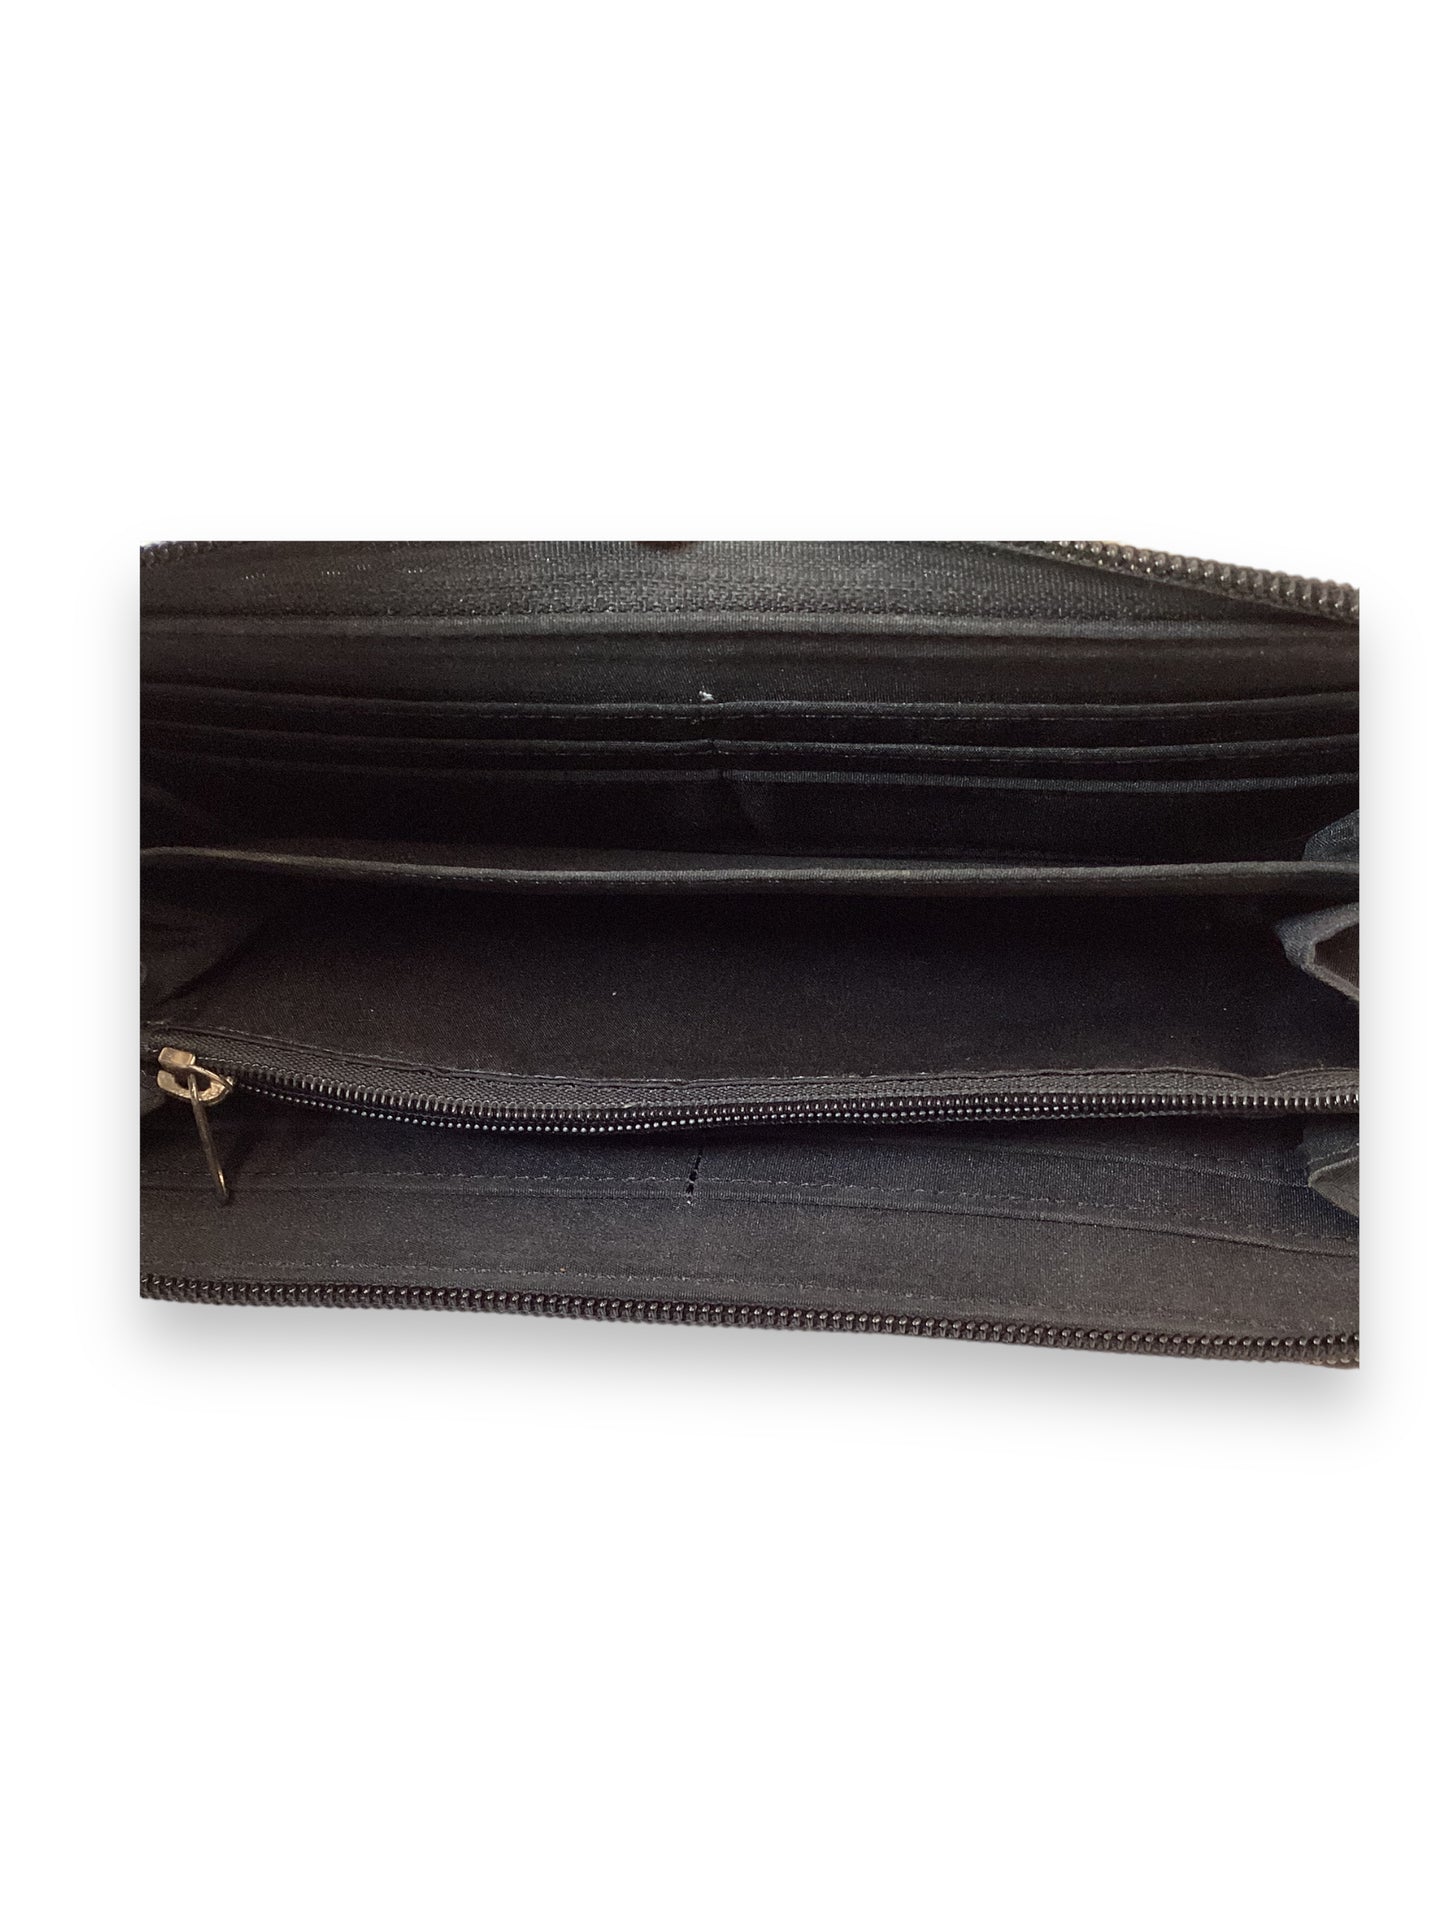 Wallet By Anne Klein  Size: Large